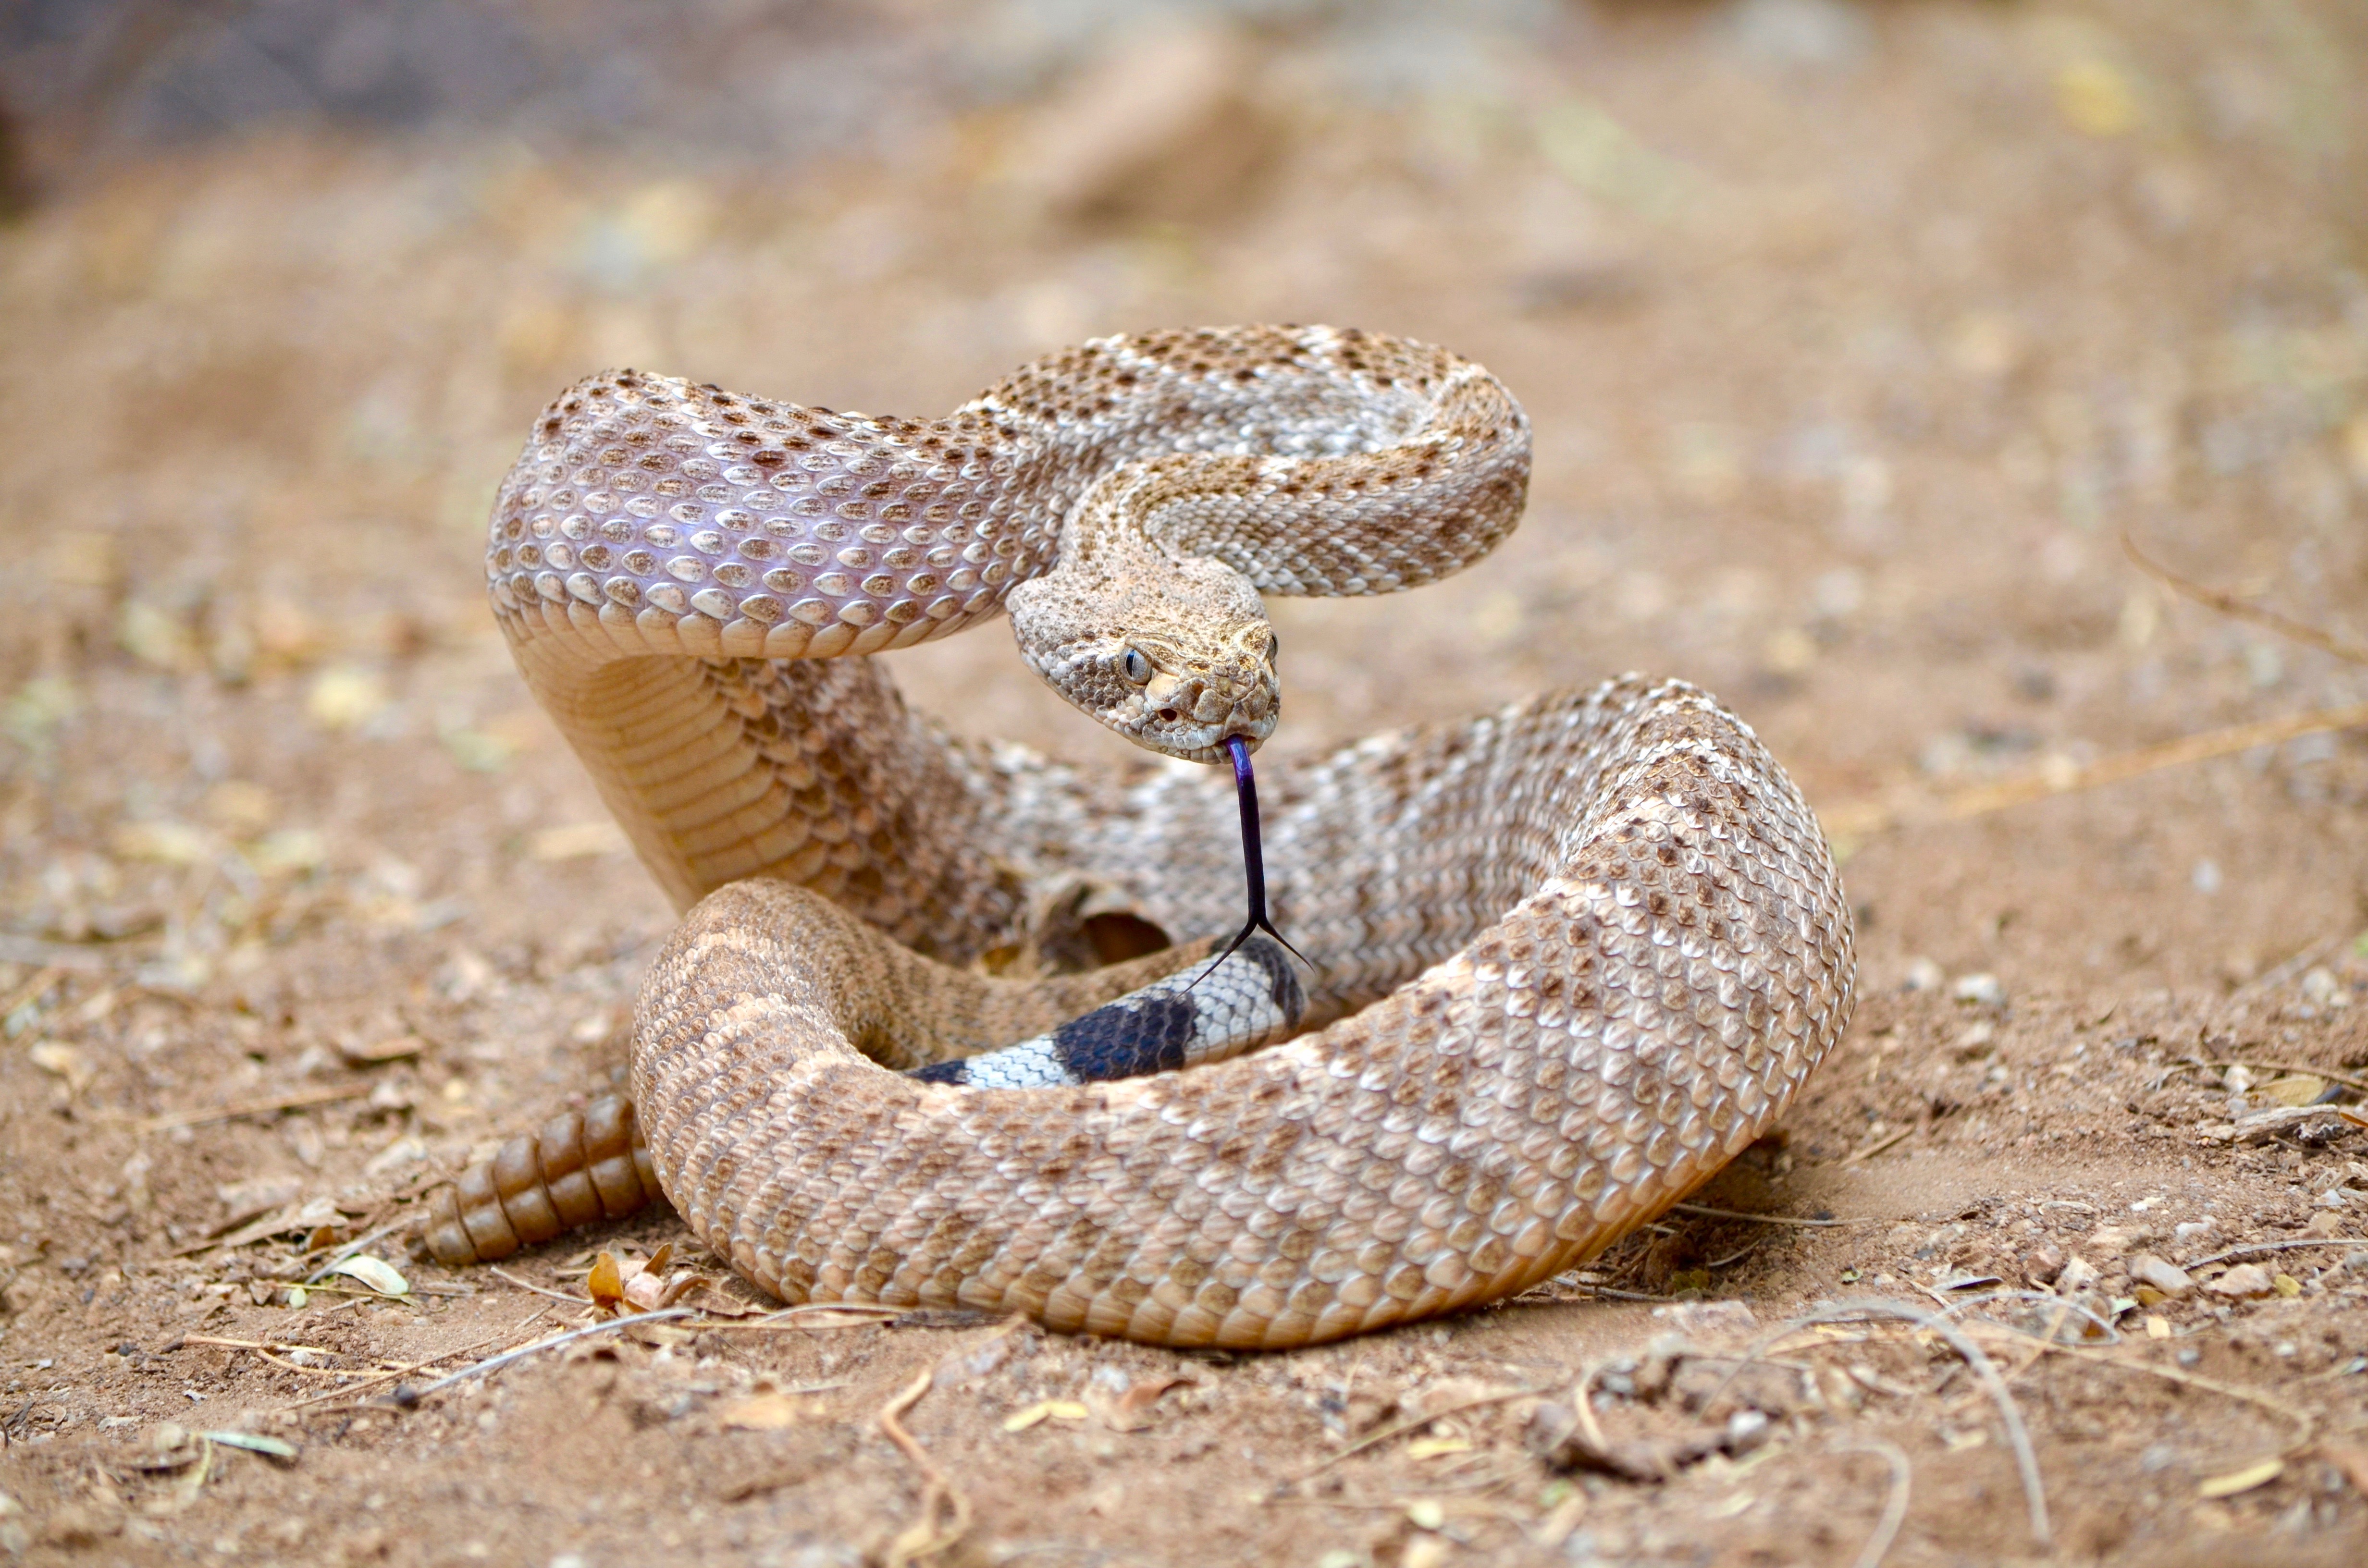 The Strange Snacking Habits Of Snakes! - Wildlife SOS